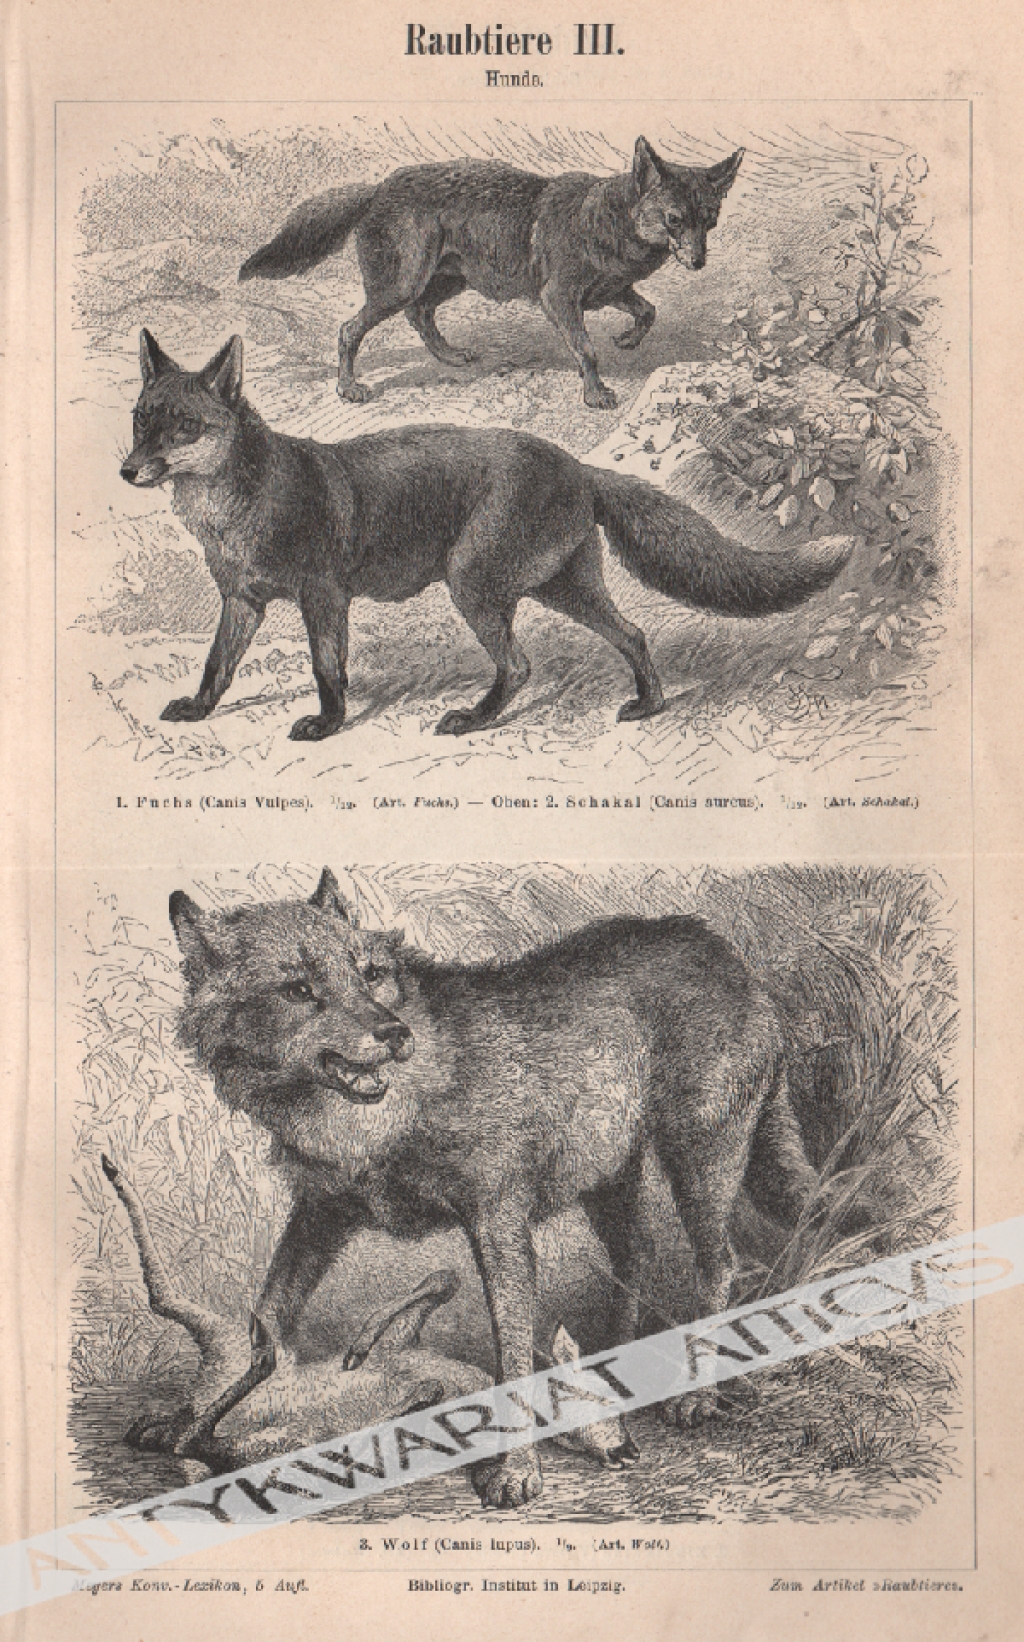 [rycina, 1897] Hunde [Psowate]:1. Fuchs (Canis Vulpes) [Lis pospolity]2. Schakal (Canis aureus) [Szakal złocisty]3. Wolf (Canis lupus) [Wilk szary]